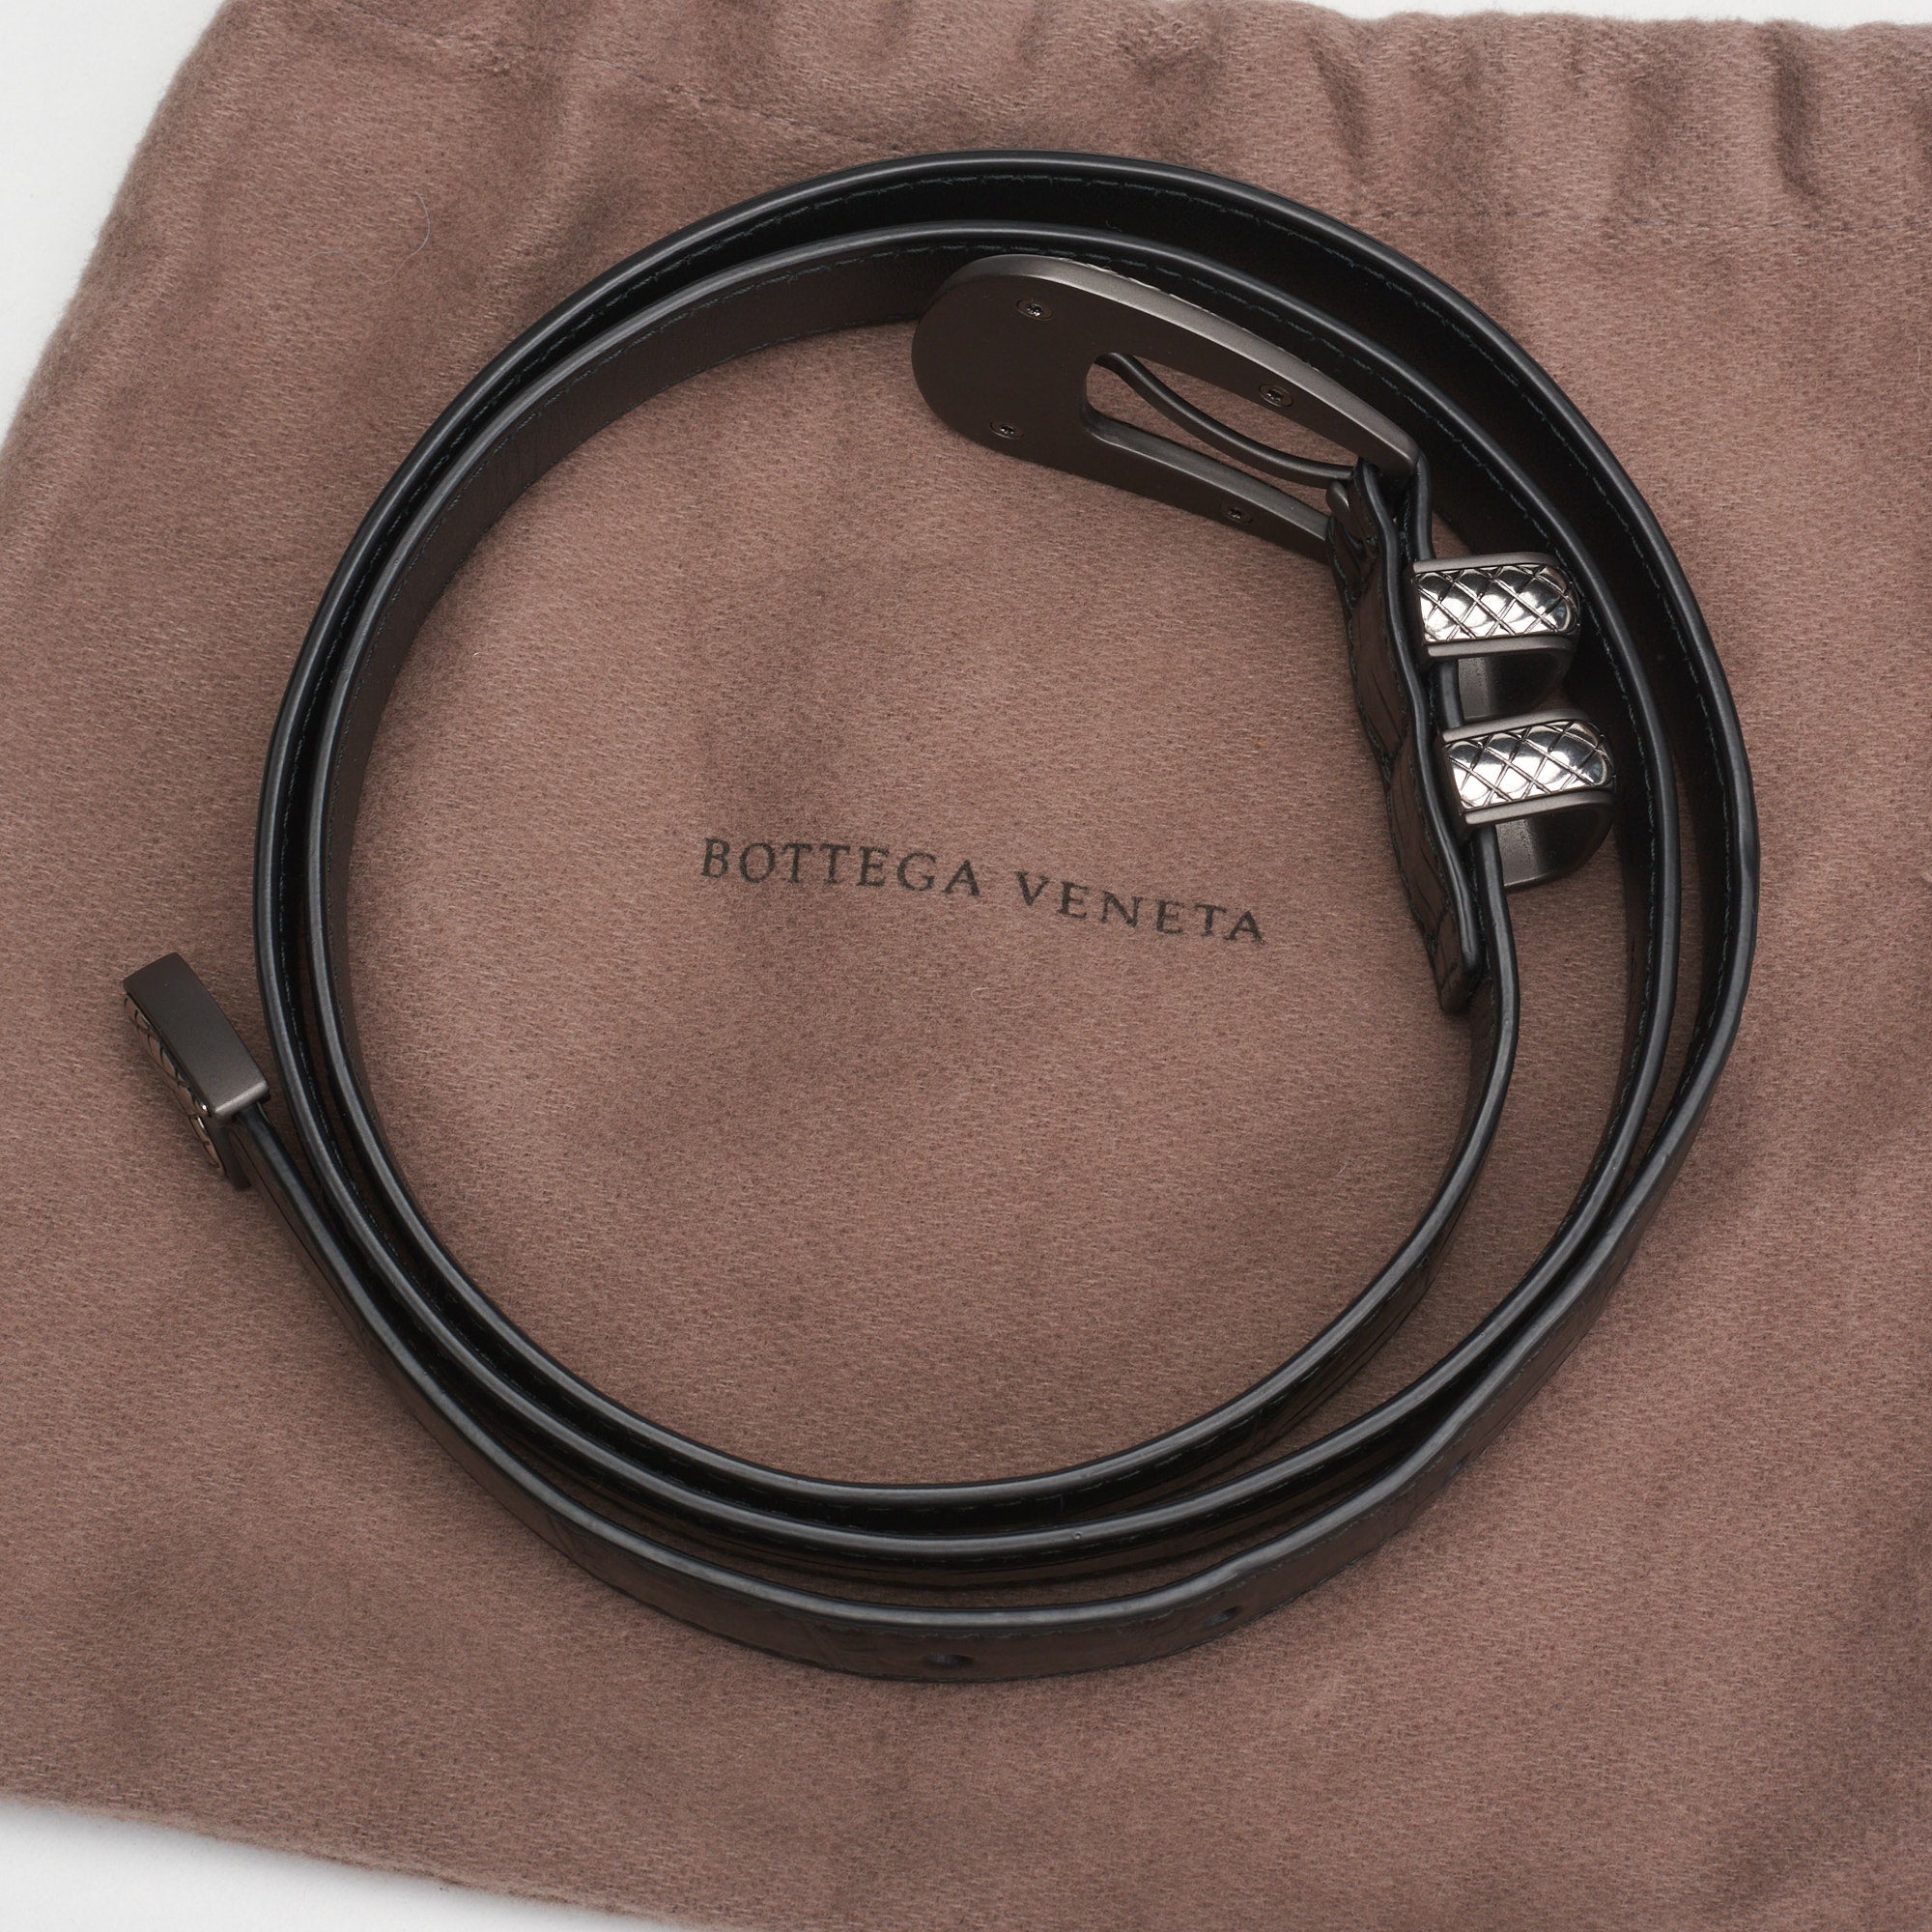 BOTTEGA VENETA Black Crocodile Belt 95cm NEW with Bag BOTTEGA VENETA